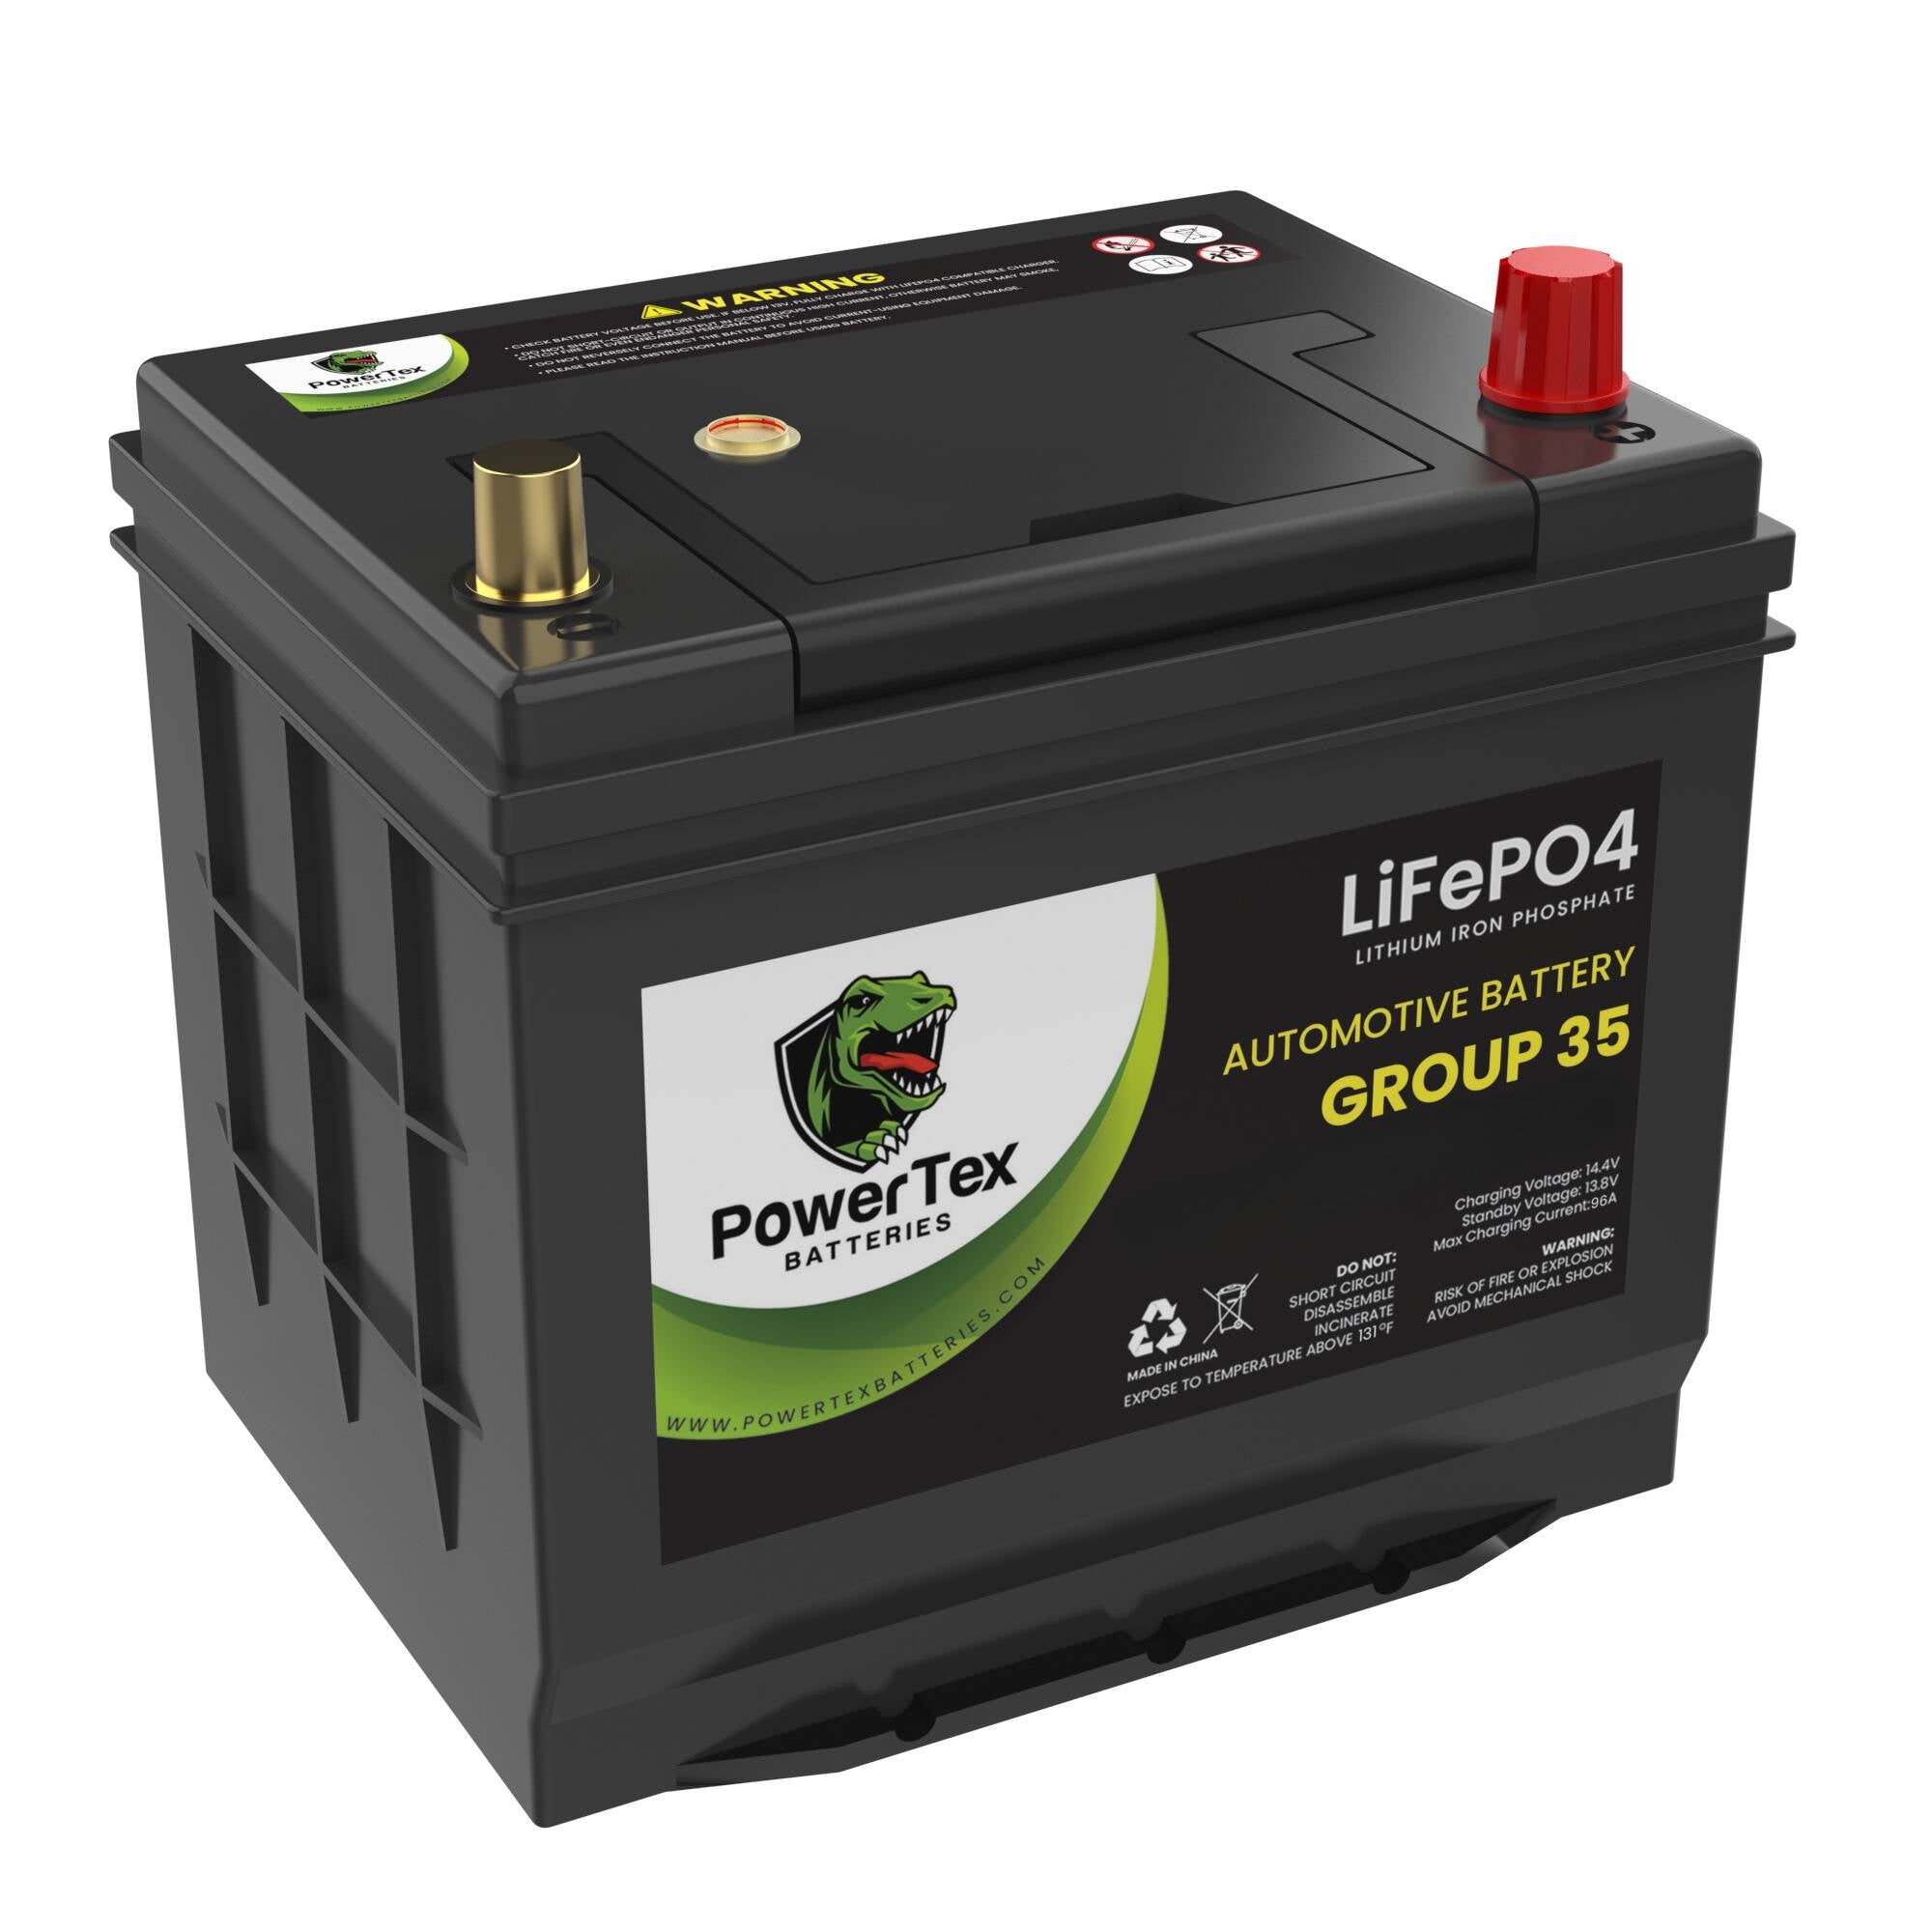 2014 Infiniti QX60 Car Battery BCI Group 35 / Q85 Lithium LiFePO4 Automotive Battery